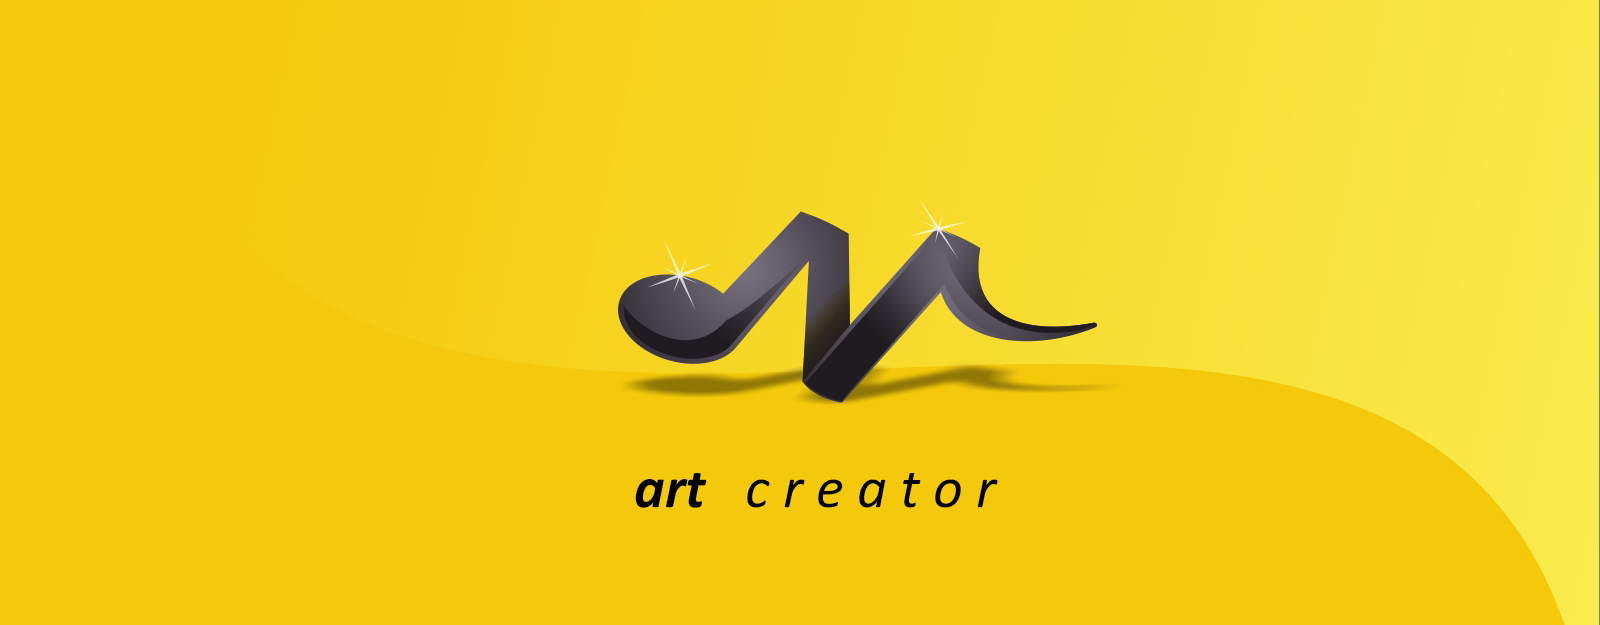 art creator 3.jpg